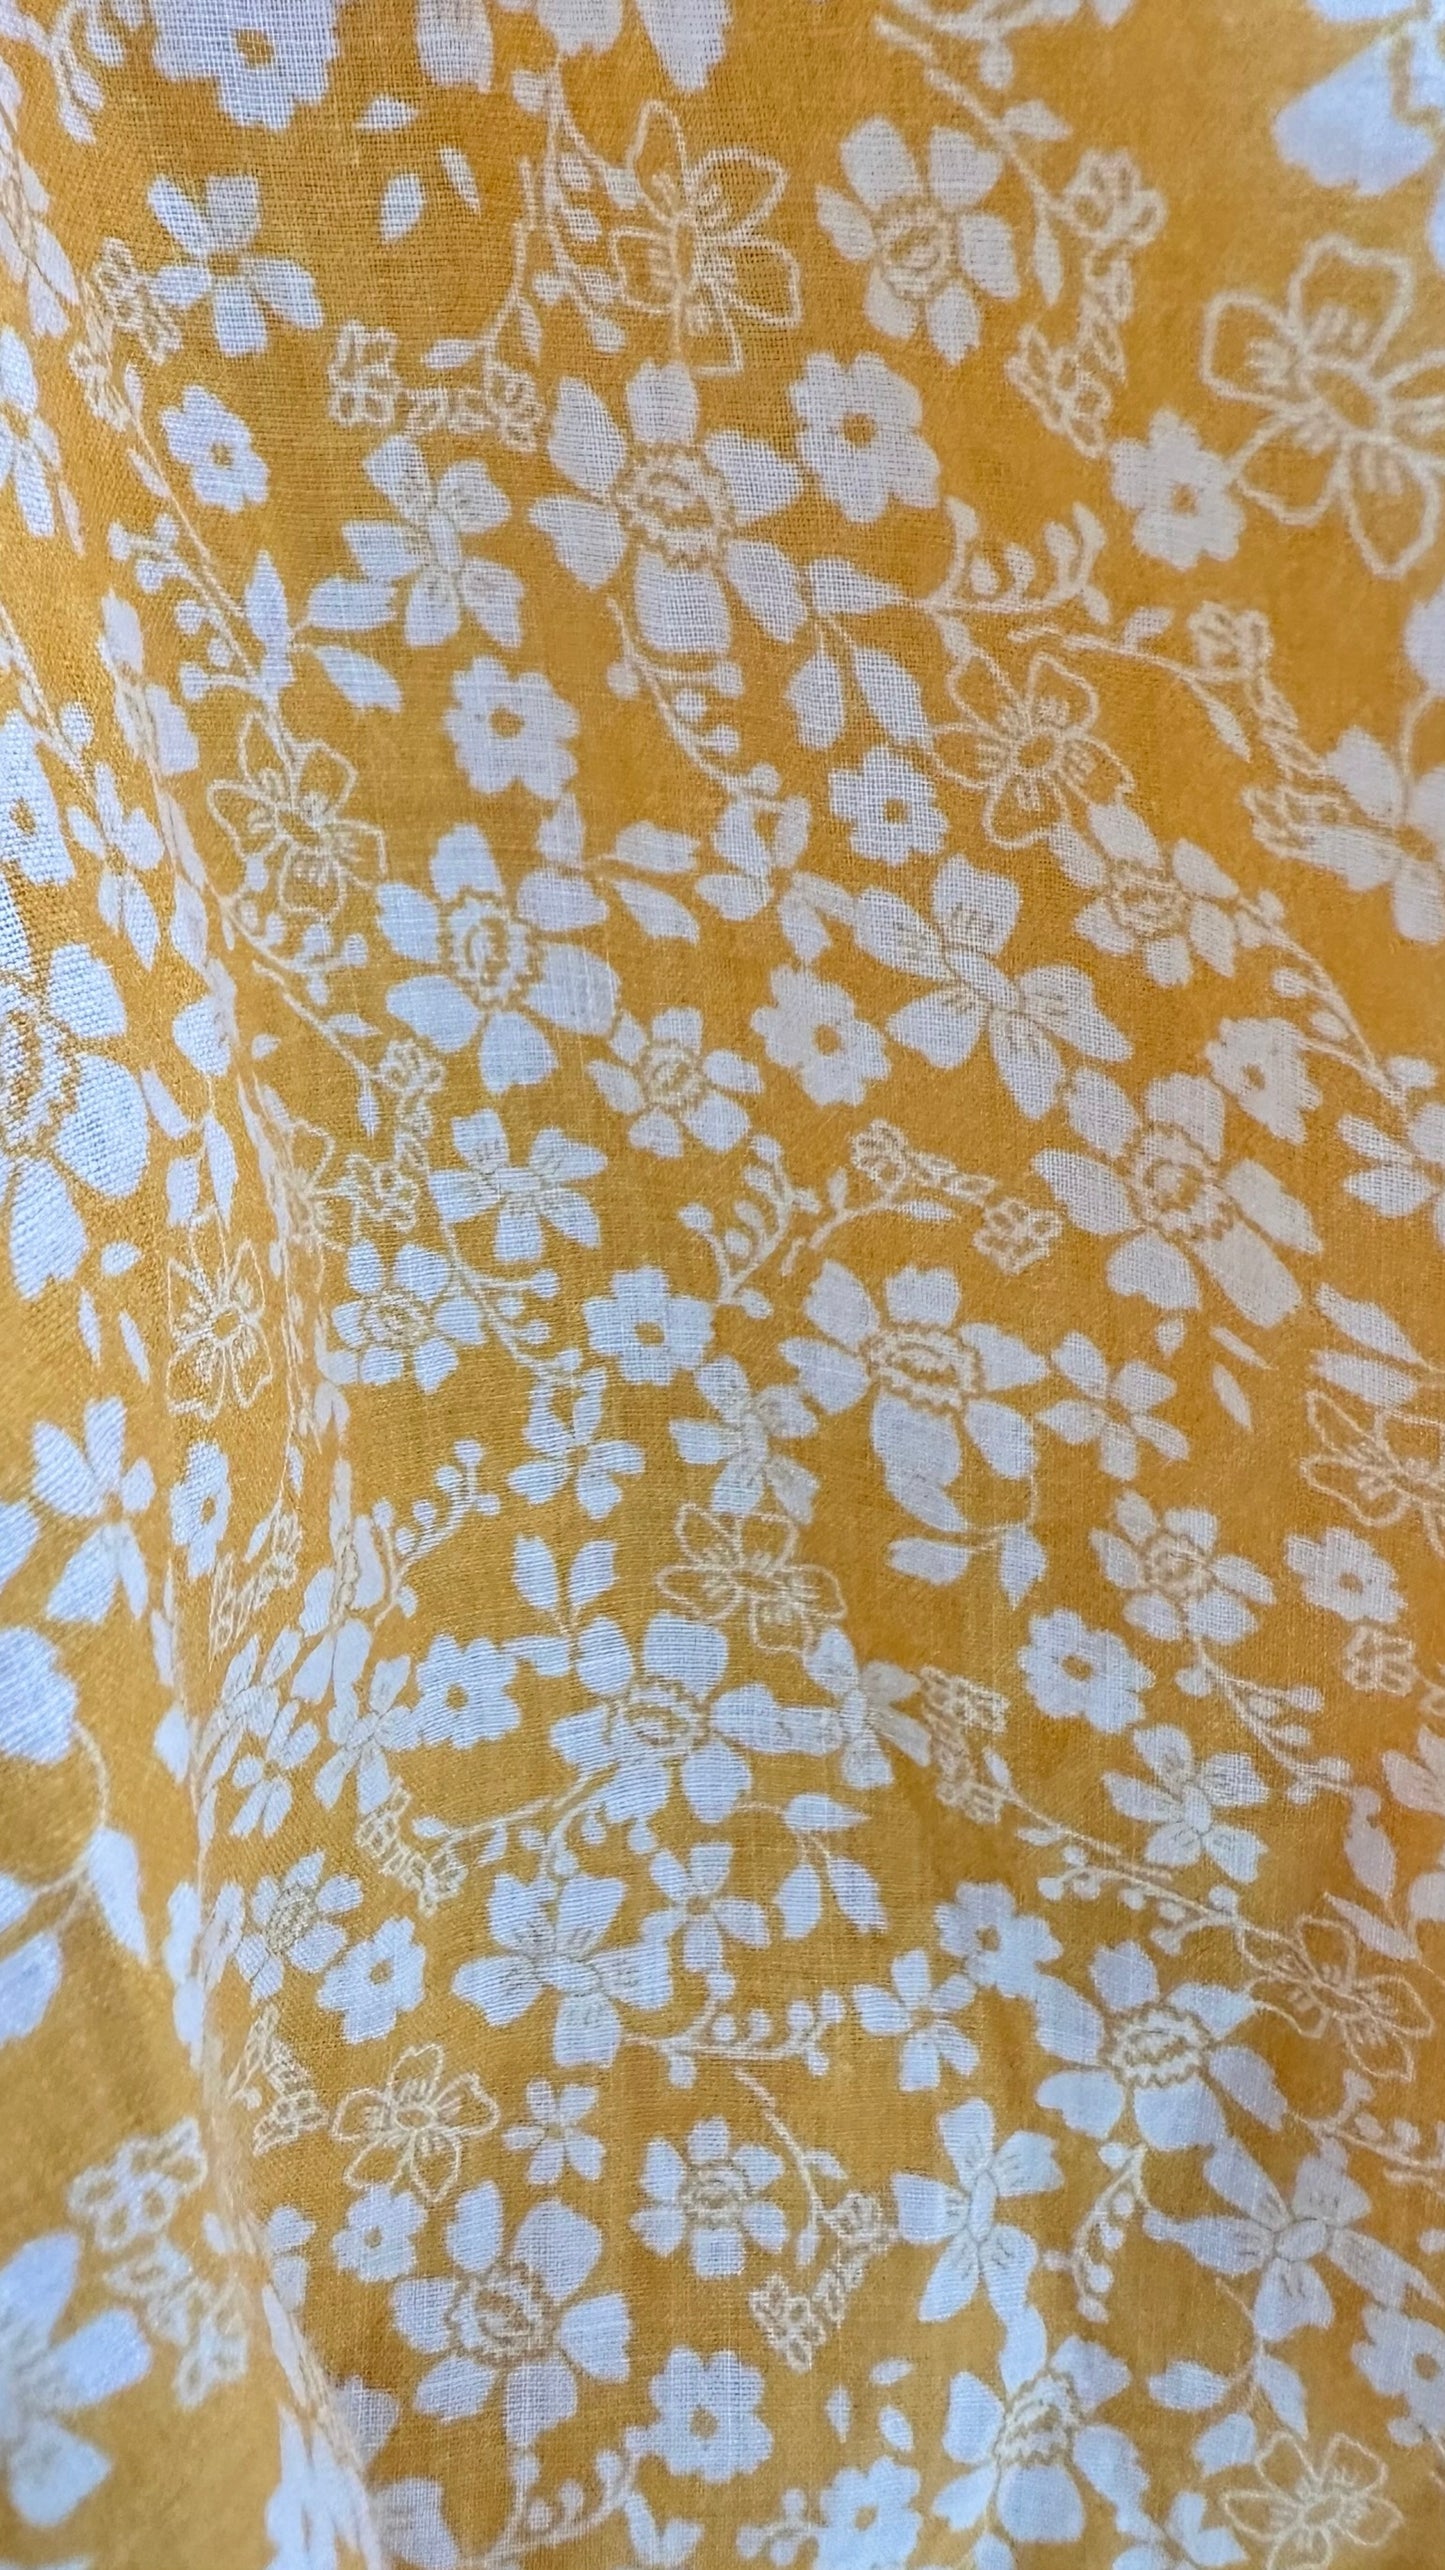 Ghost wedding guest orange floral print wrap midi dress medium M UK 10-12